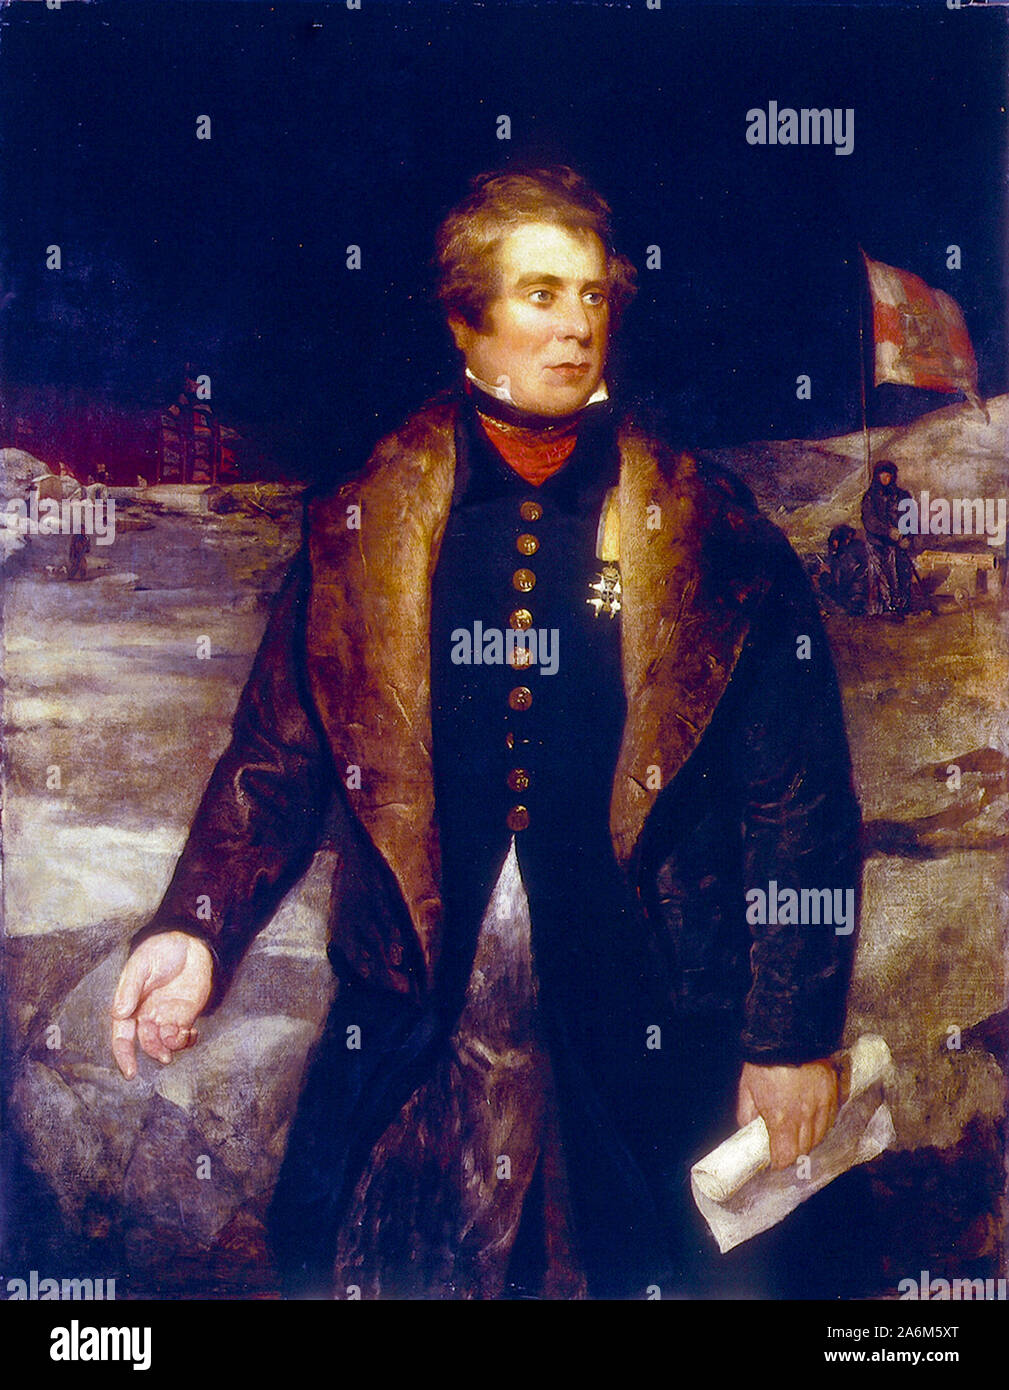 Sir John Ross (1777 - 1856), oficial de la Marina Real Británica y explorador polar. Foto de stock